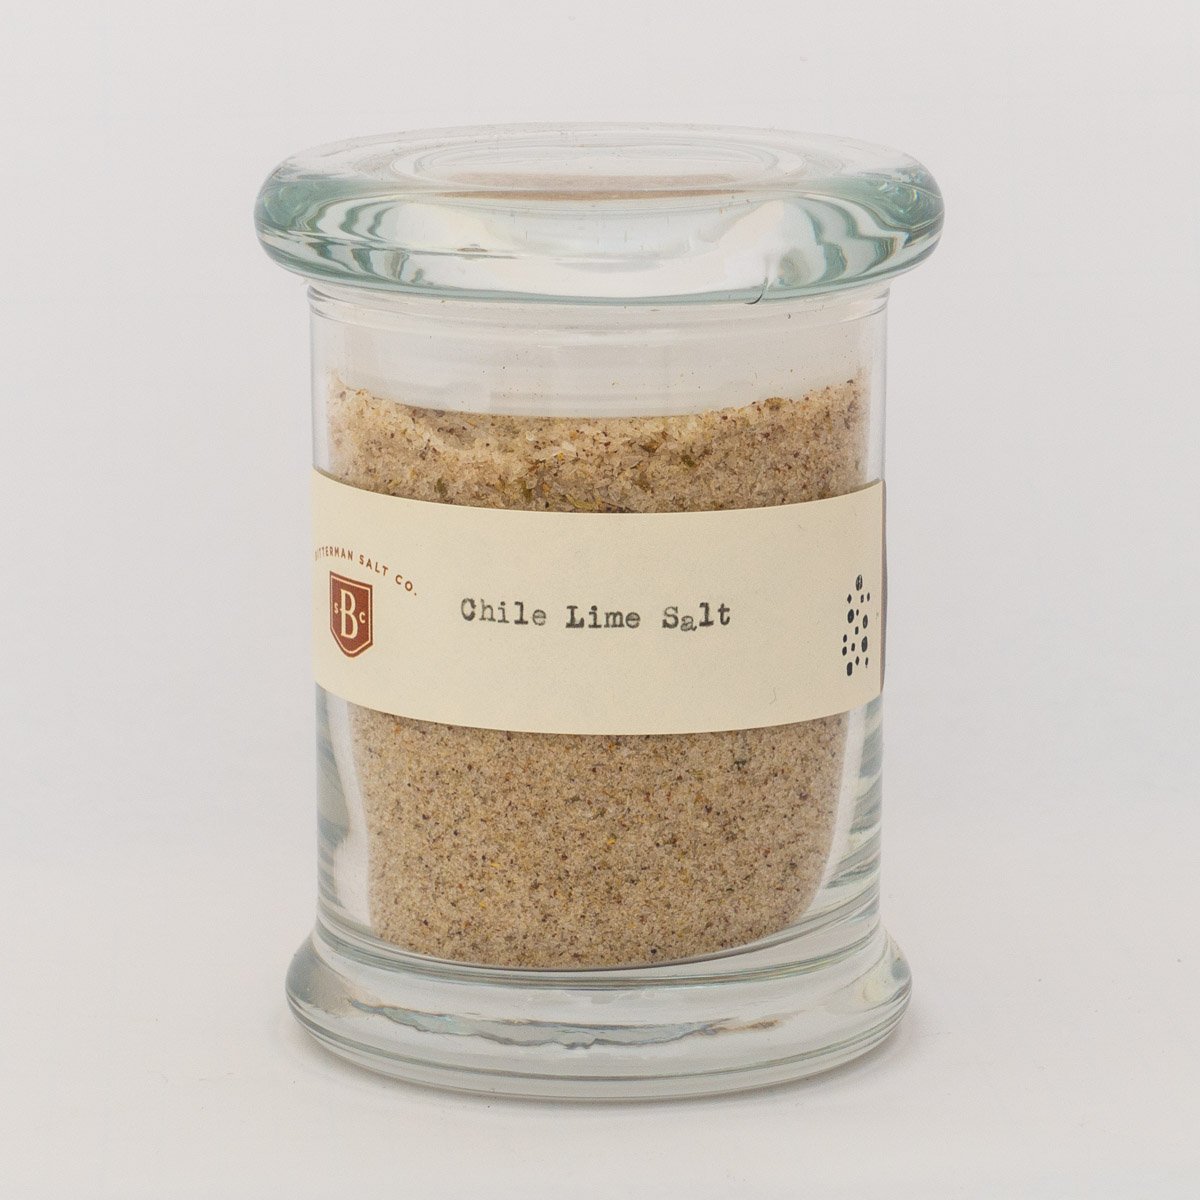 Image of Bitterman's Chili Lime Salt